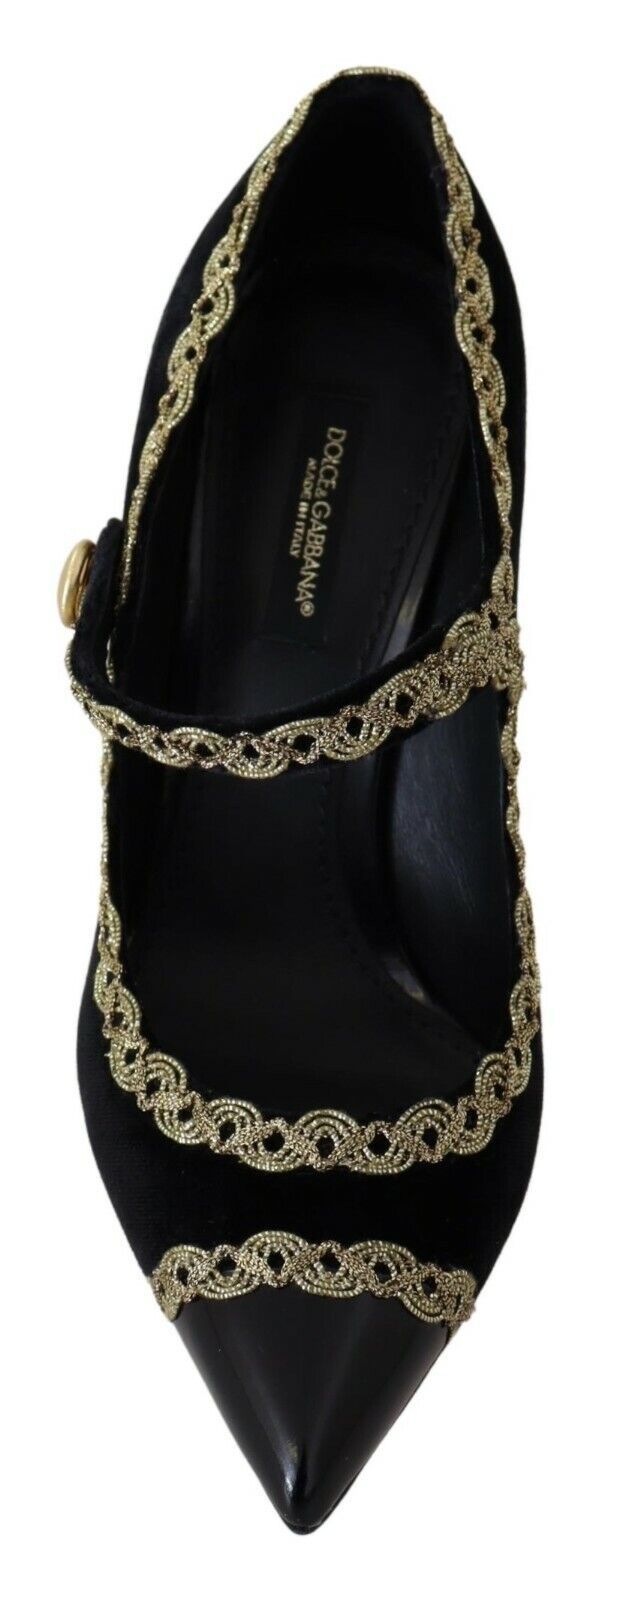 Dolce & Gabbana Black Embellished Velvet Mary Jane Pumps Women's Shoes